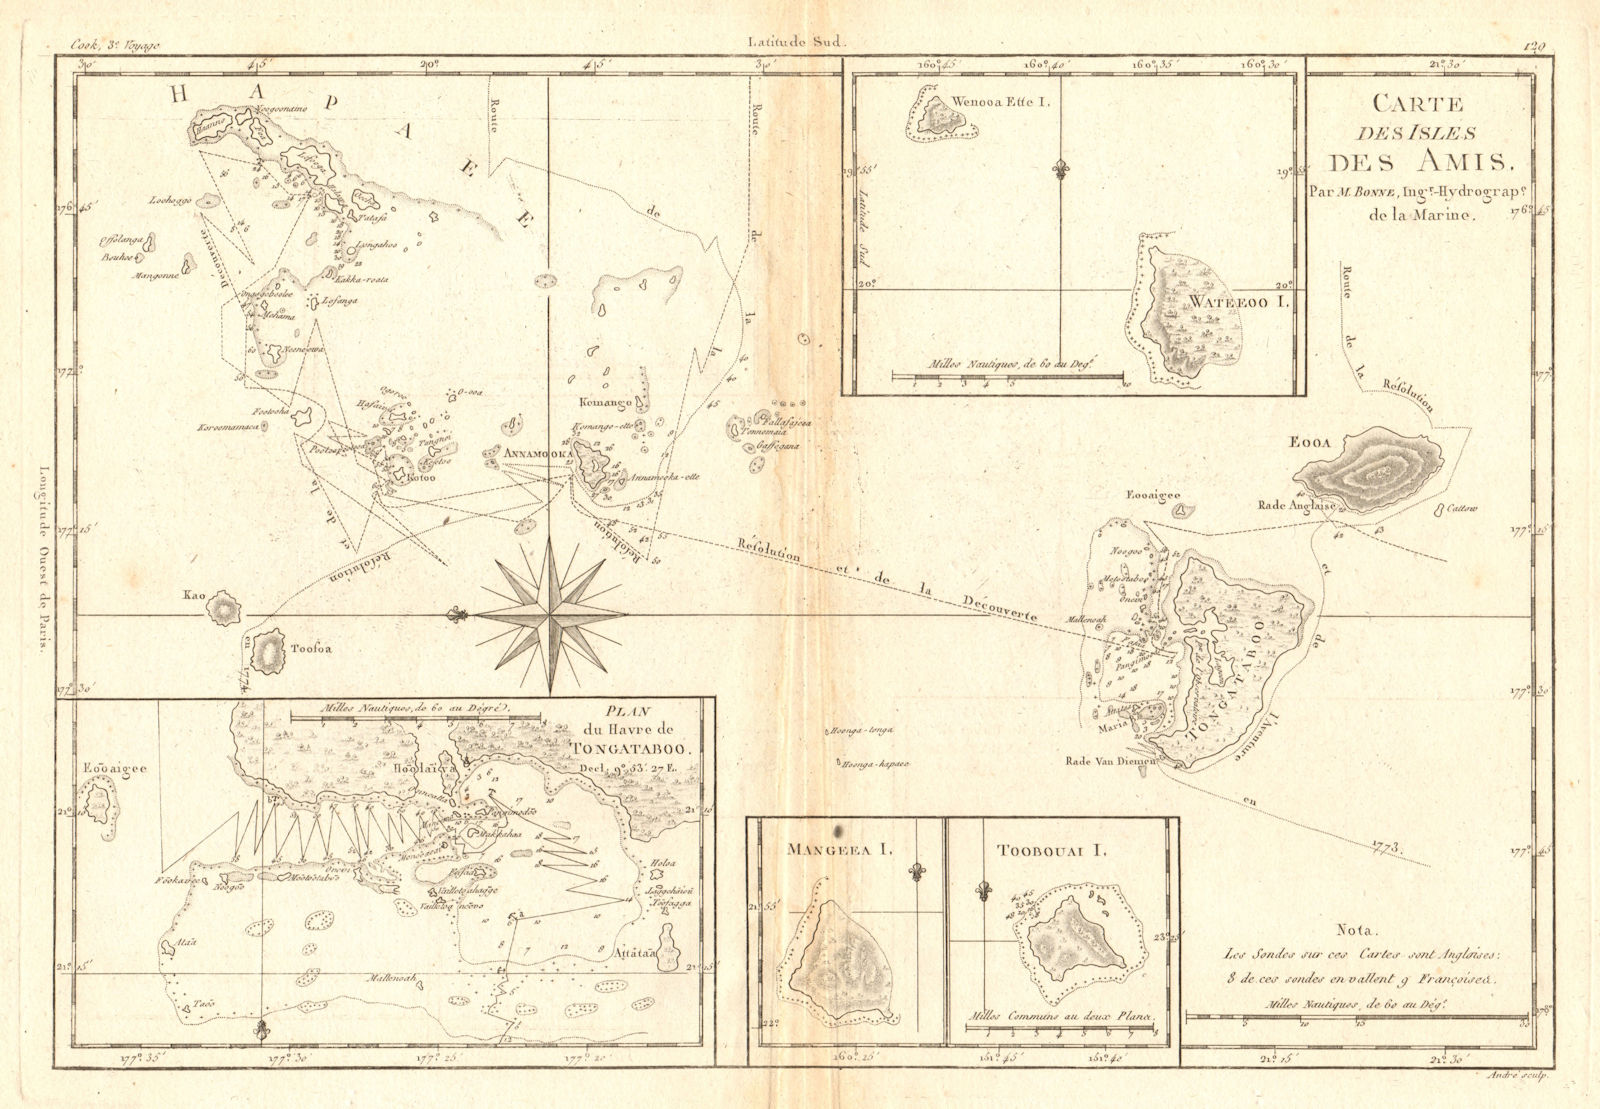 Carte des Isles des Amis. Friendly or Tonga Islands. Tongatapu. BONNE 1788 map